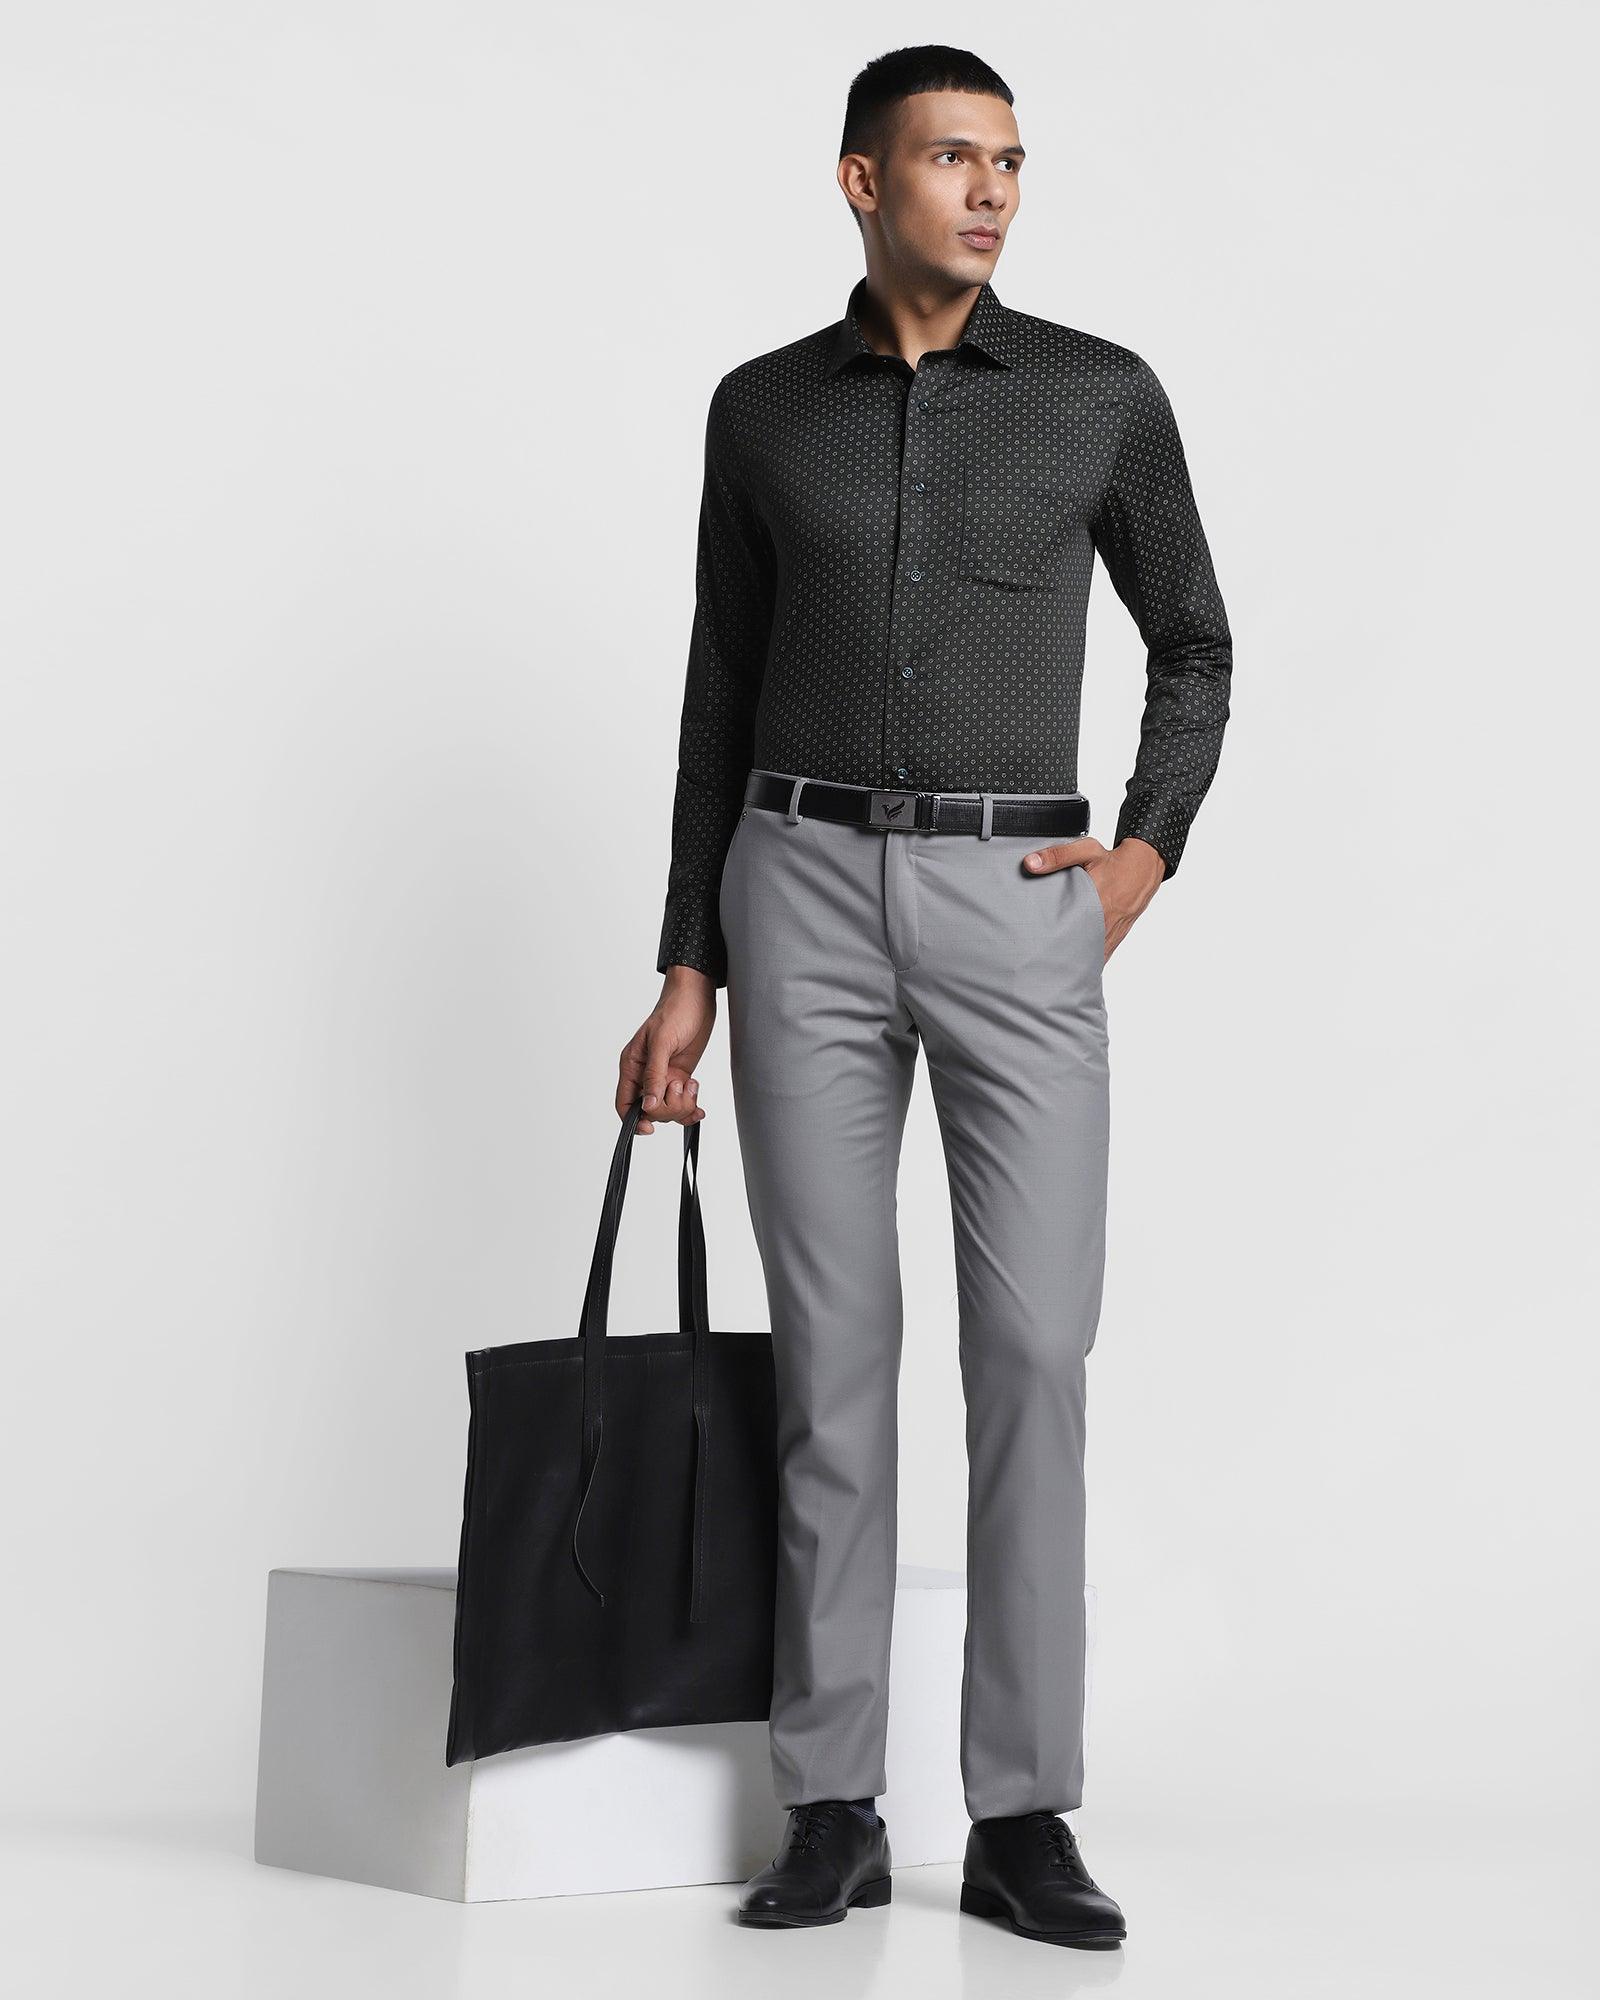 TechPro Slim Fit B-91 Formal Grey Solid Trouser - Ashley